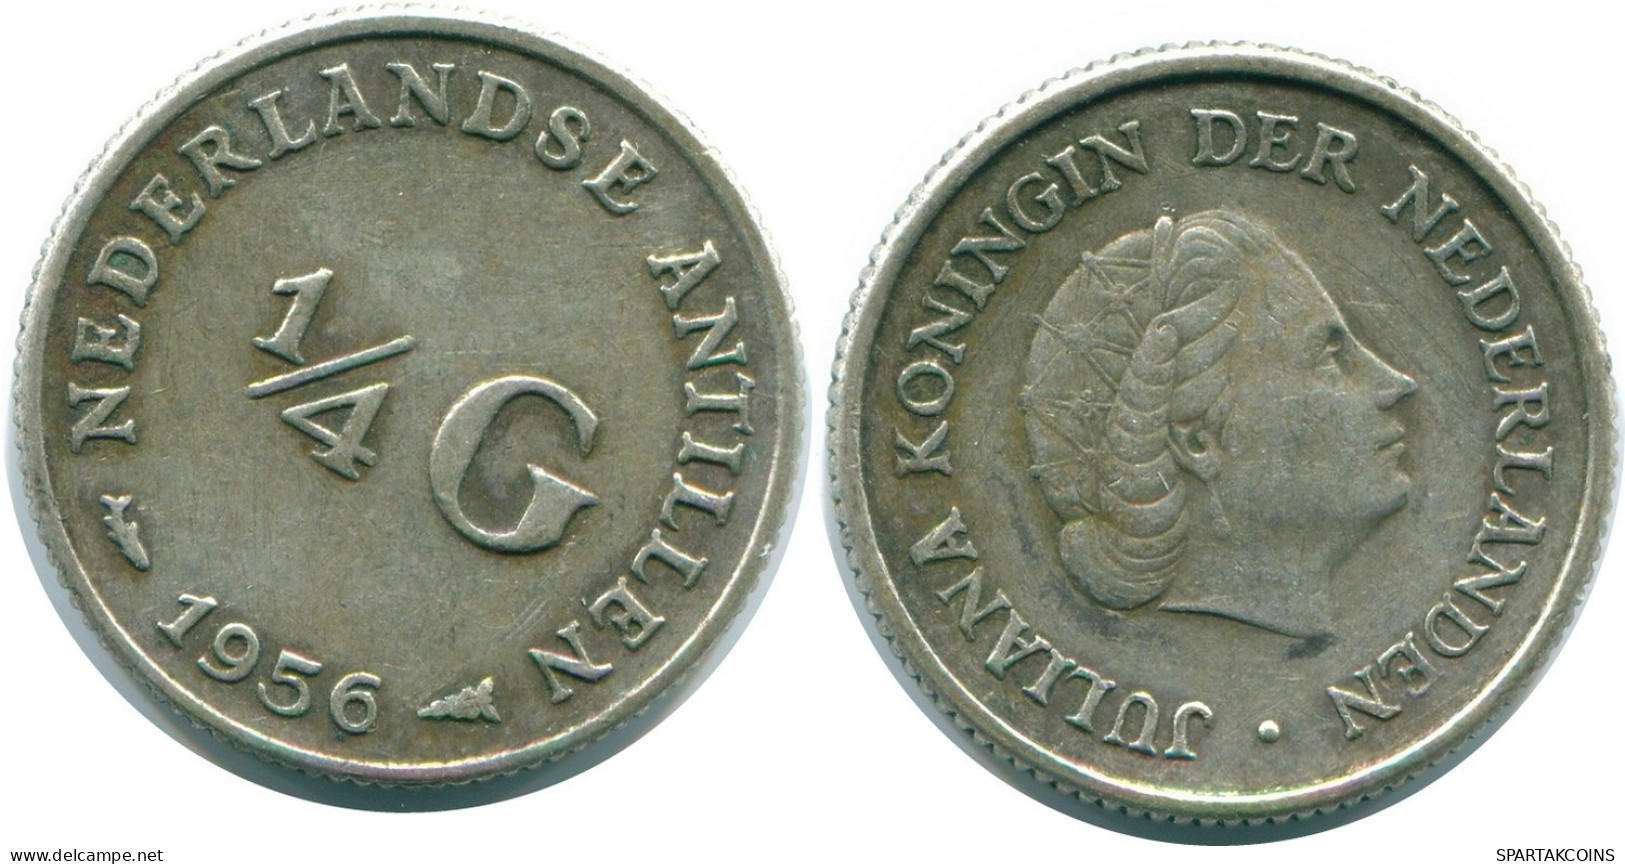 1/4 GULDEN 1956 NIEDERLÄNDISCHE ANTILLEN SILBER Koloniale Münze #NL10952.4.D.A - Netherlands Antilles